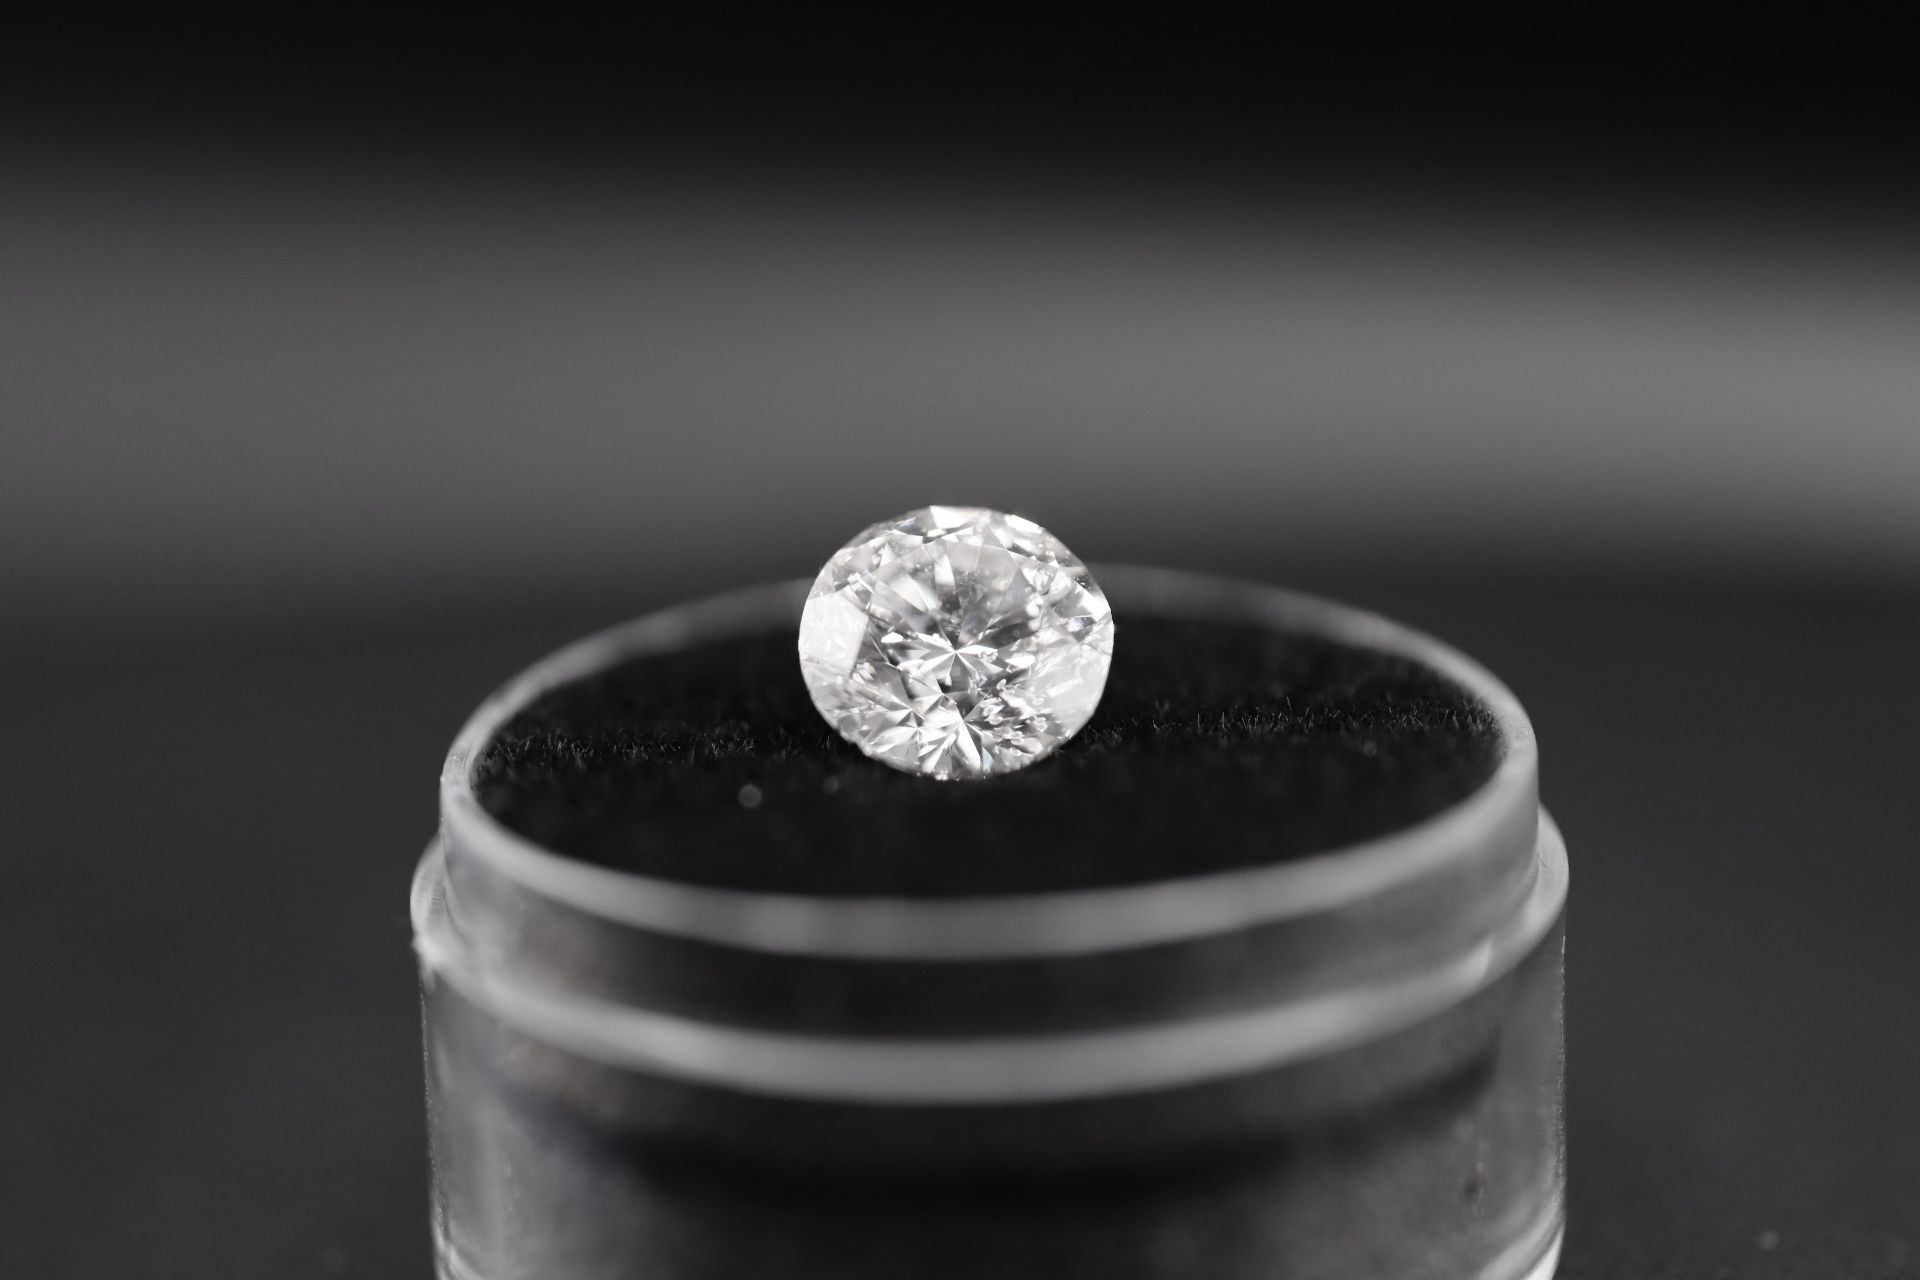 Round Brilliant Cut Natural Diamond 2.01 Carat Colour D Clarity VS1 - DGI Certificate - Image 12 of 24